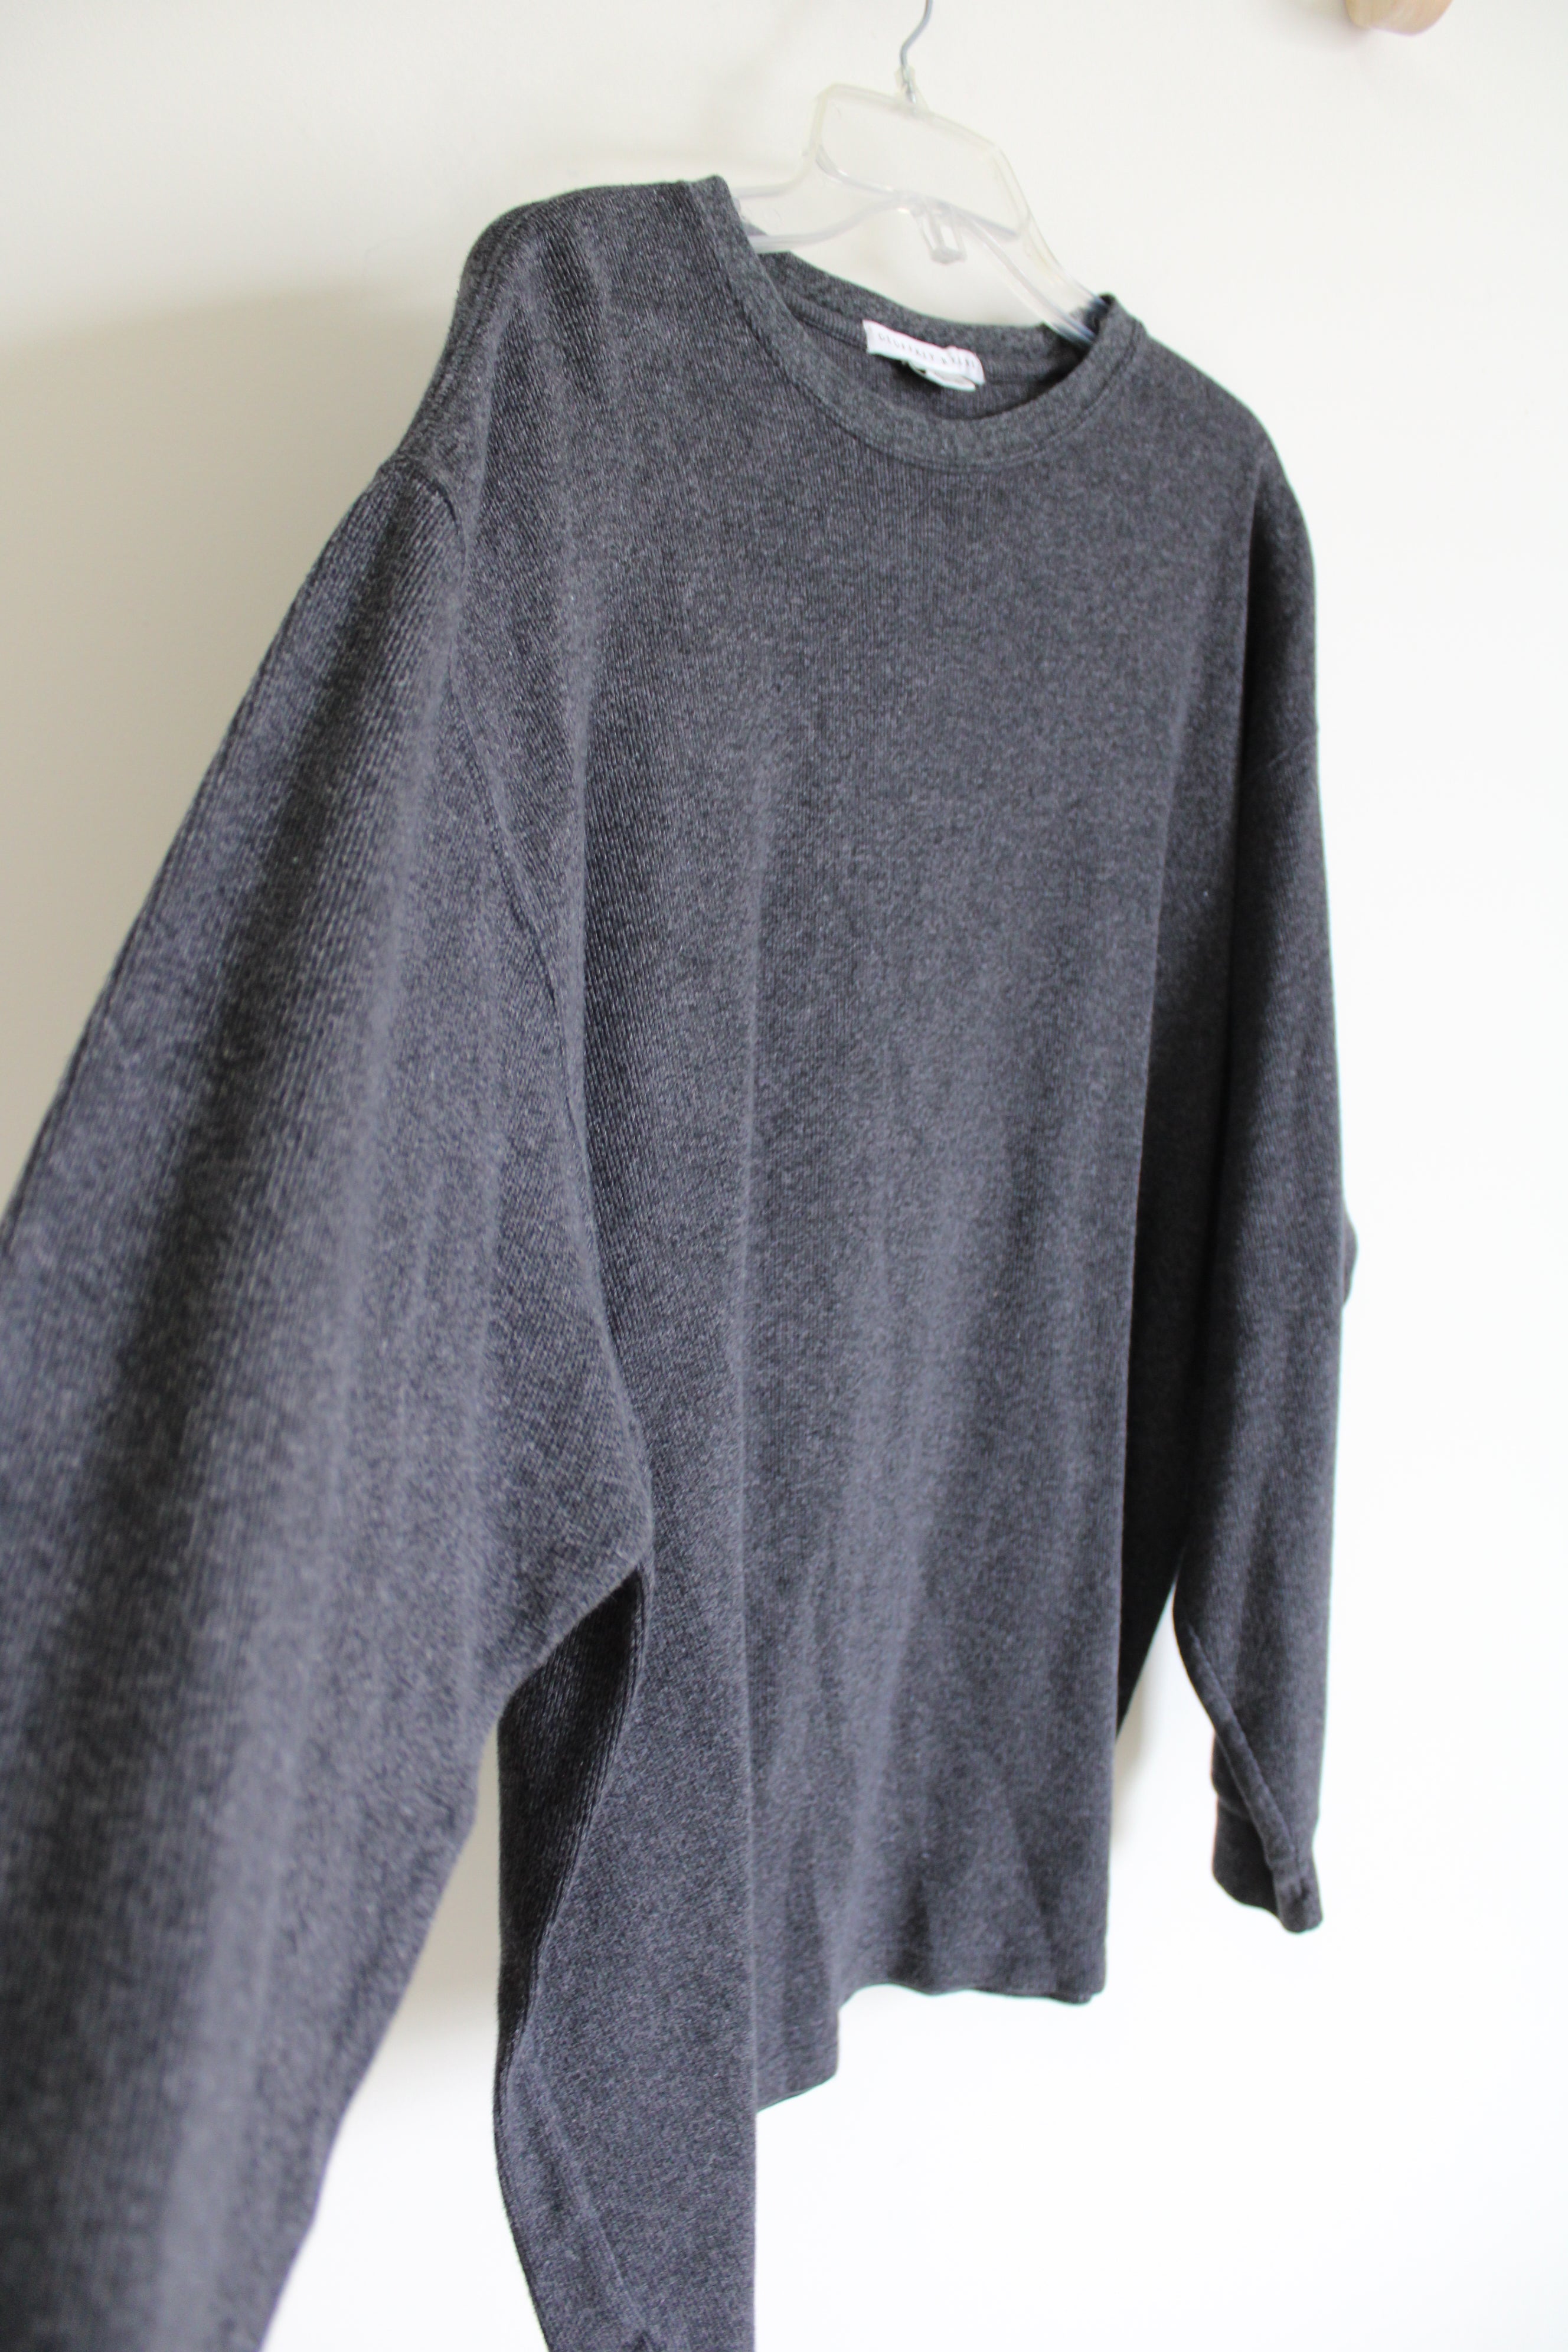 Geoffrey Beene Charcoal Gray Knit shirt | XL